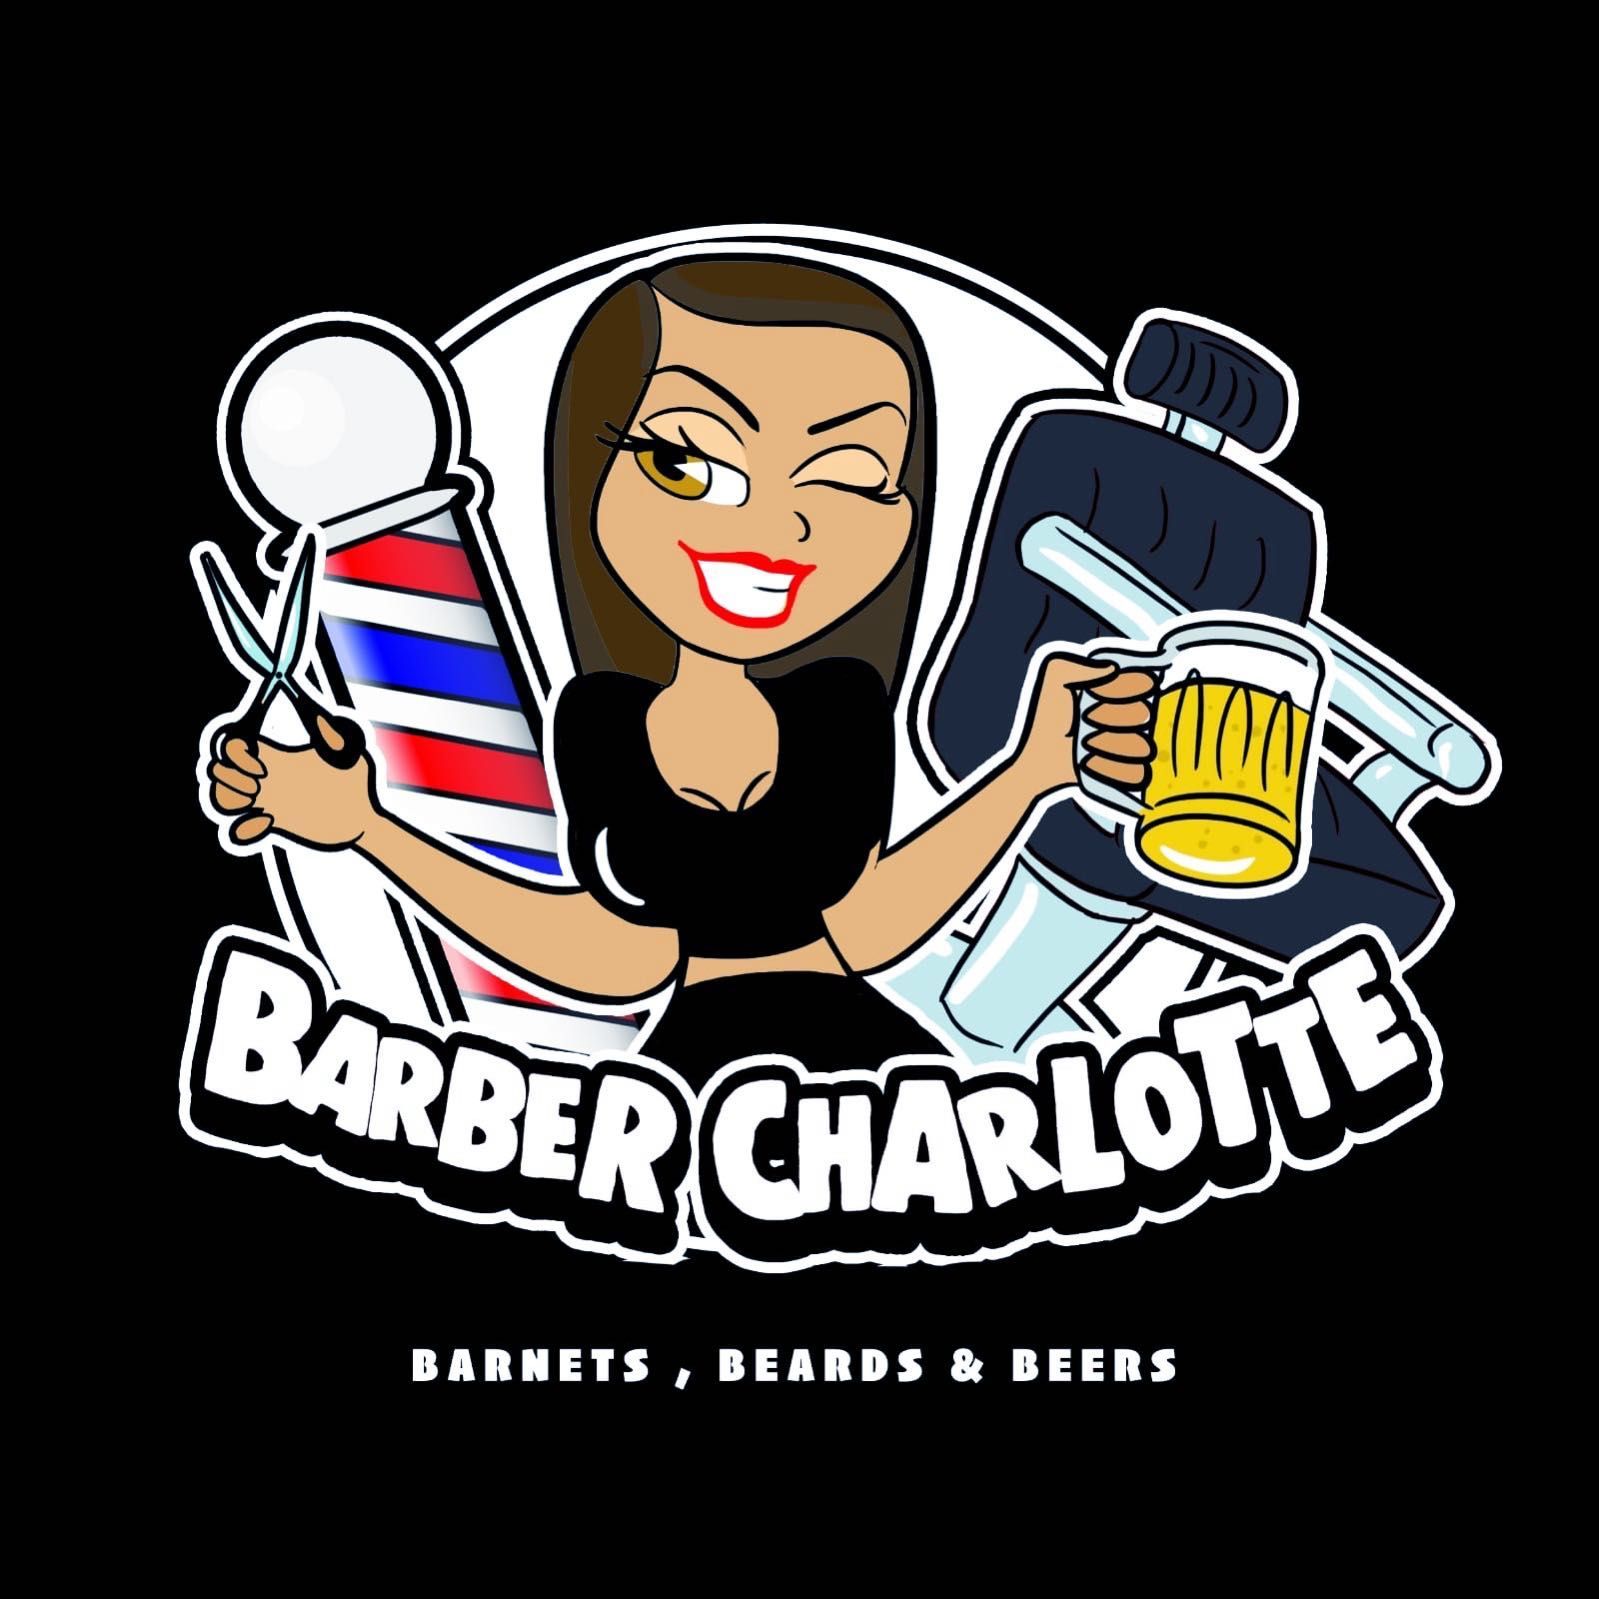 Barber Charlotte, Barber, Crawley